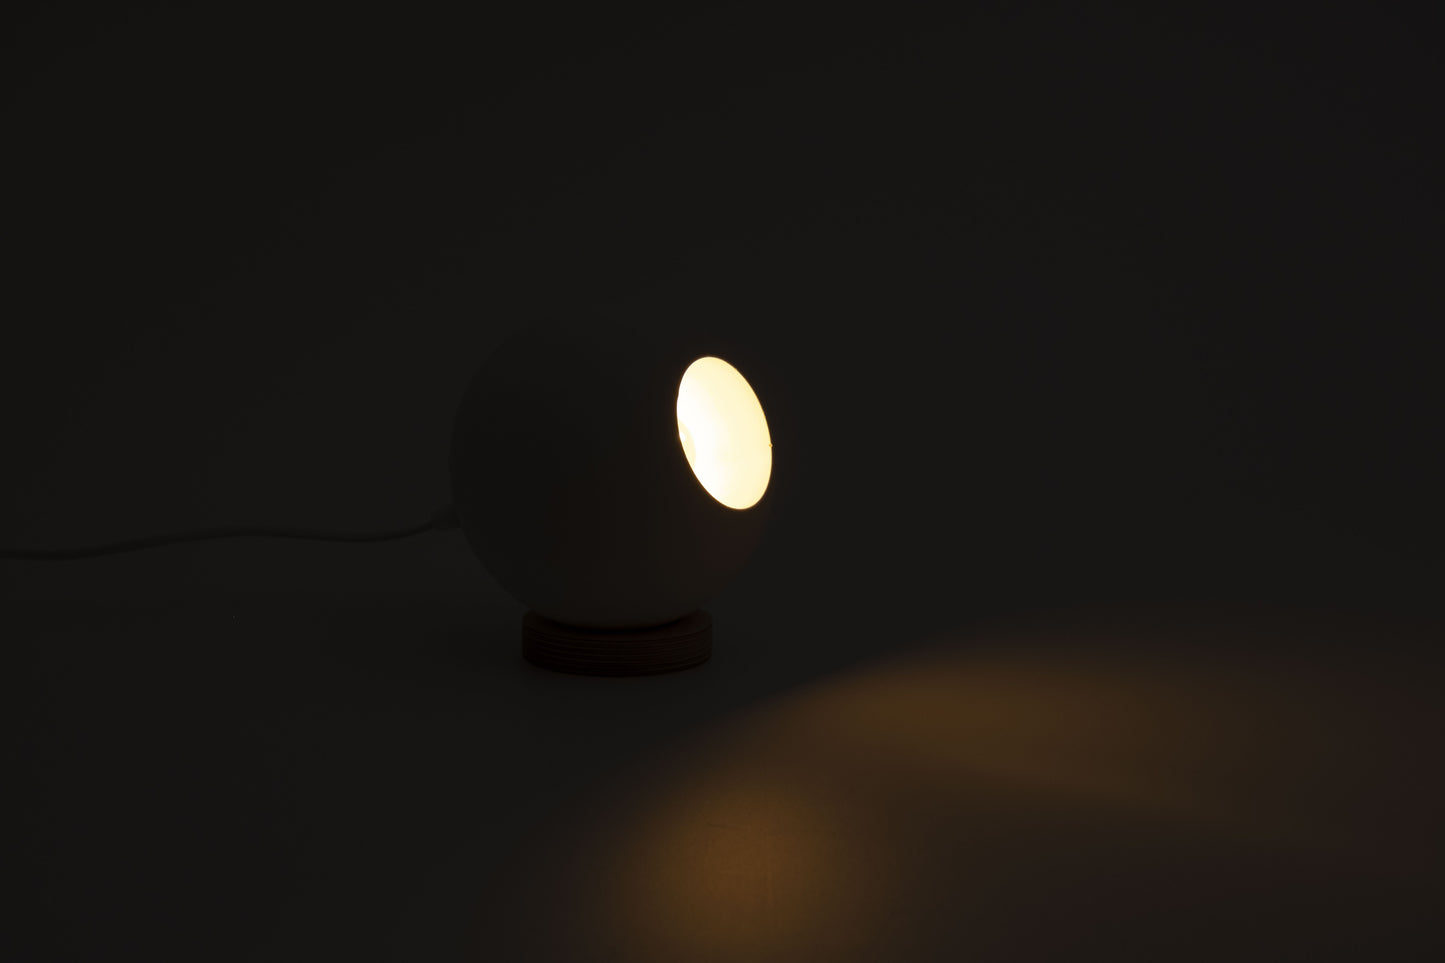 White Round Concrete Table Lamp